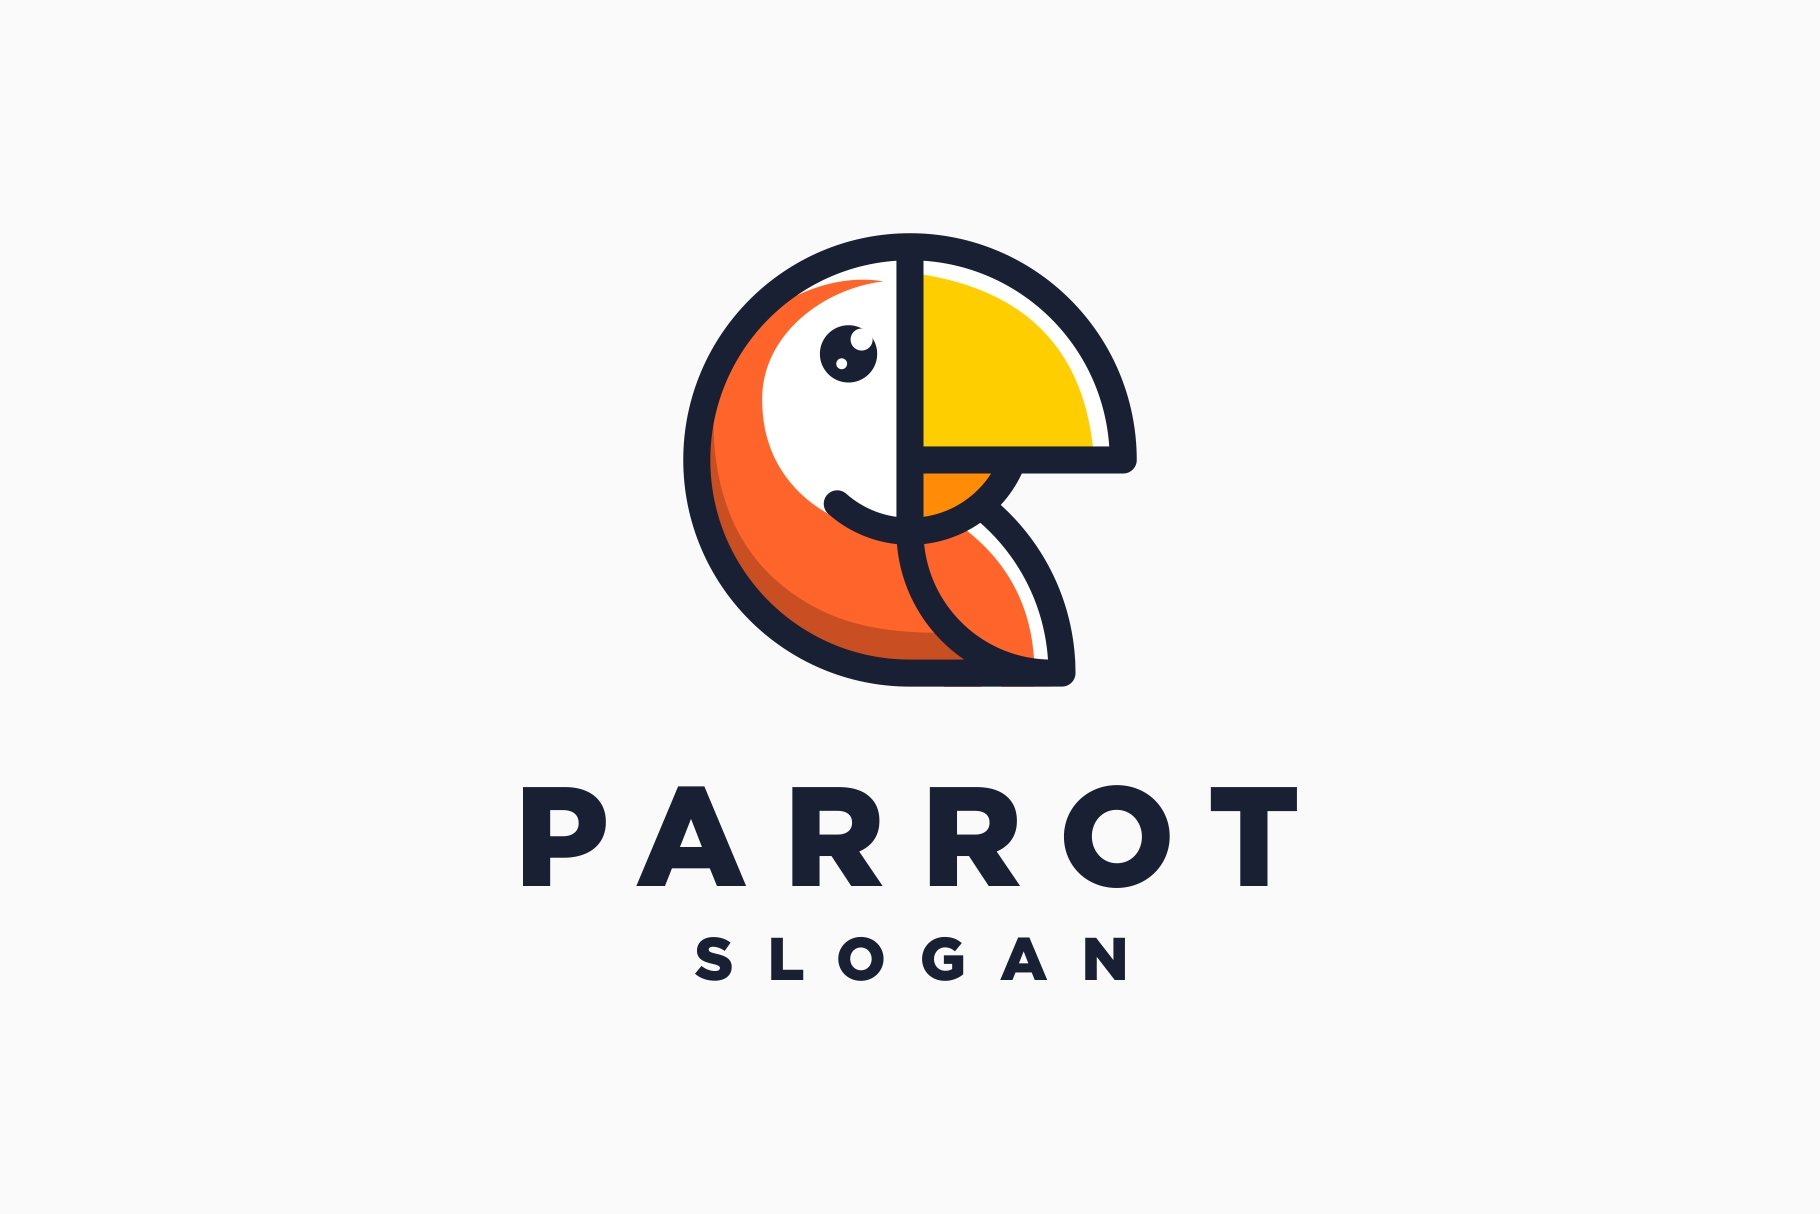 Cute Mascot Parrot Macaw Bird Logo cover image.